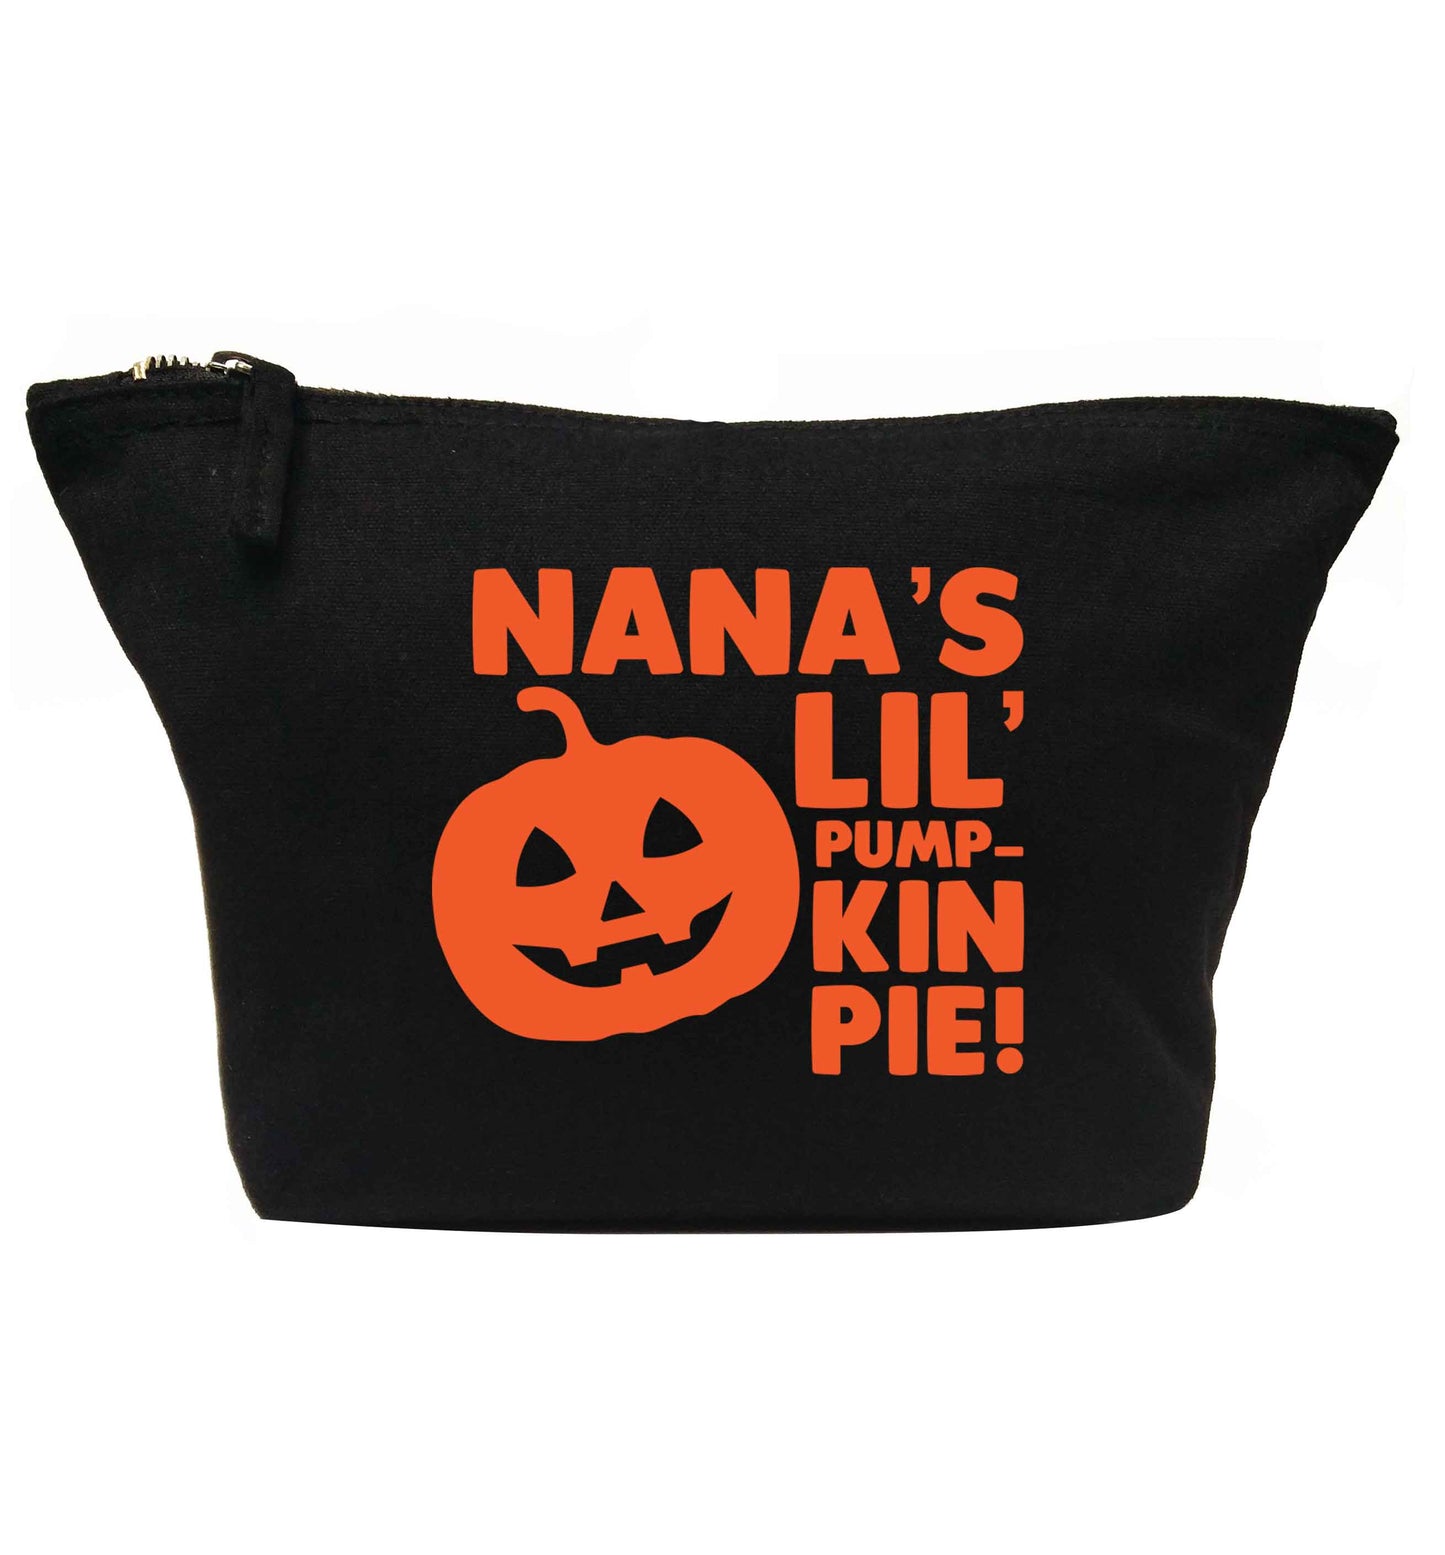 Nana's lil' pumpkin pie | Makeup / wash bag